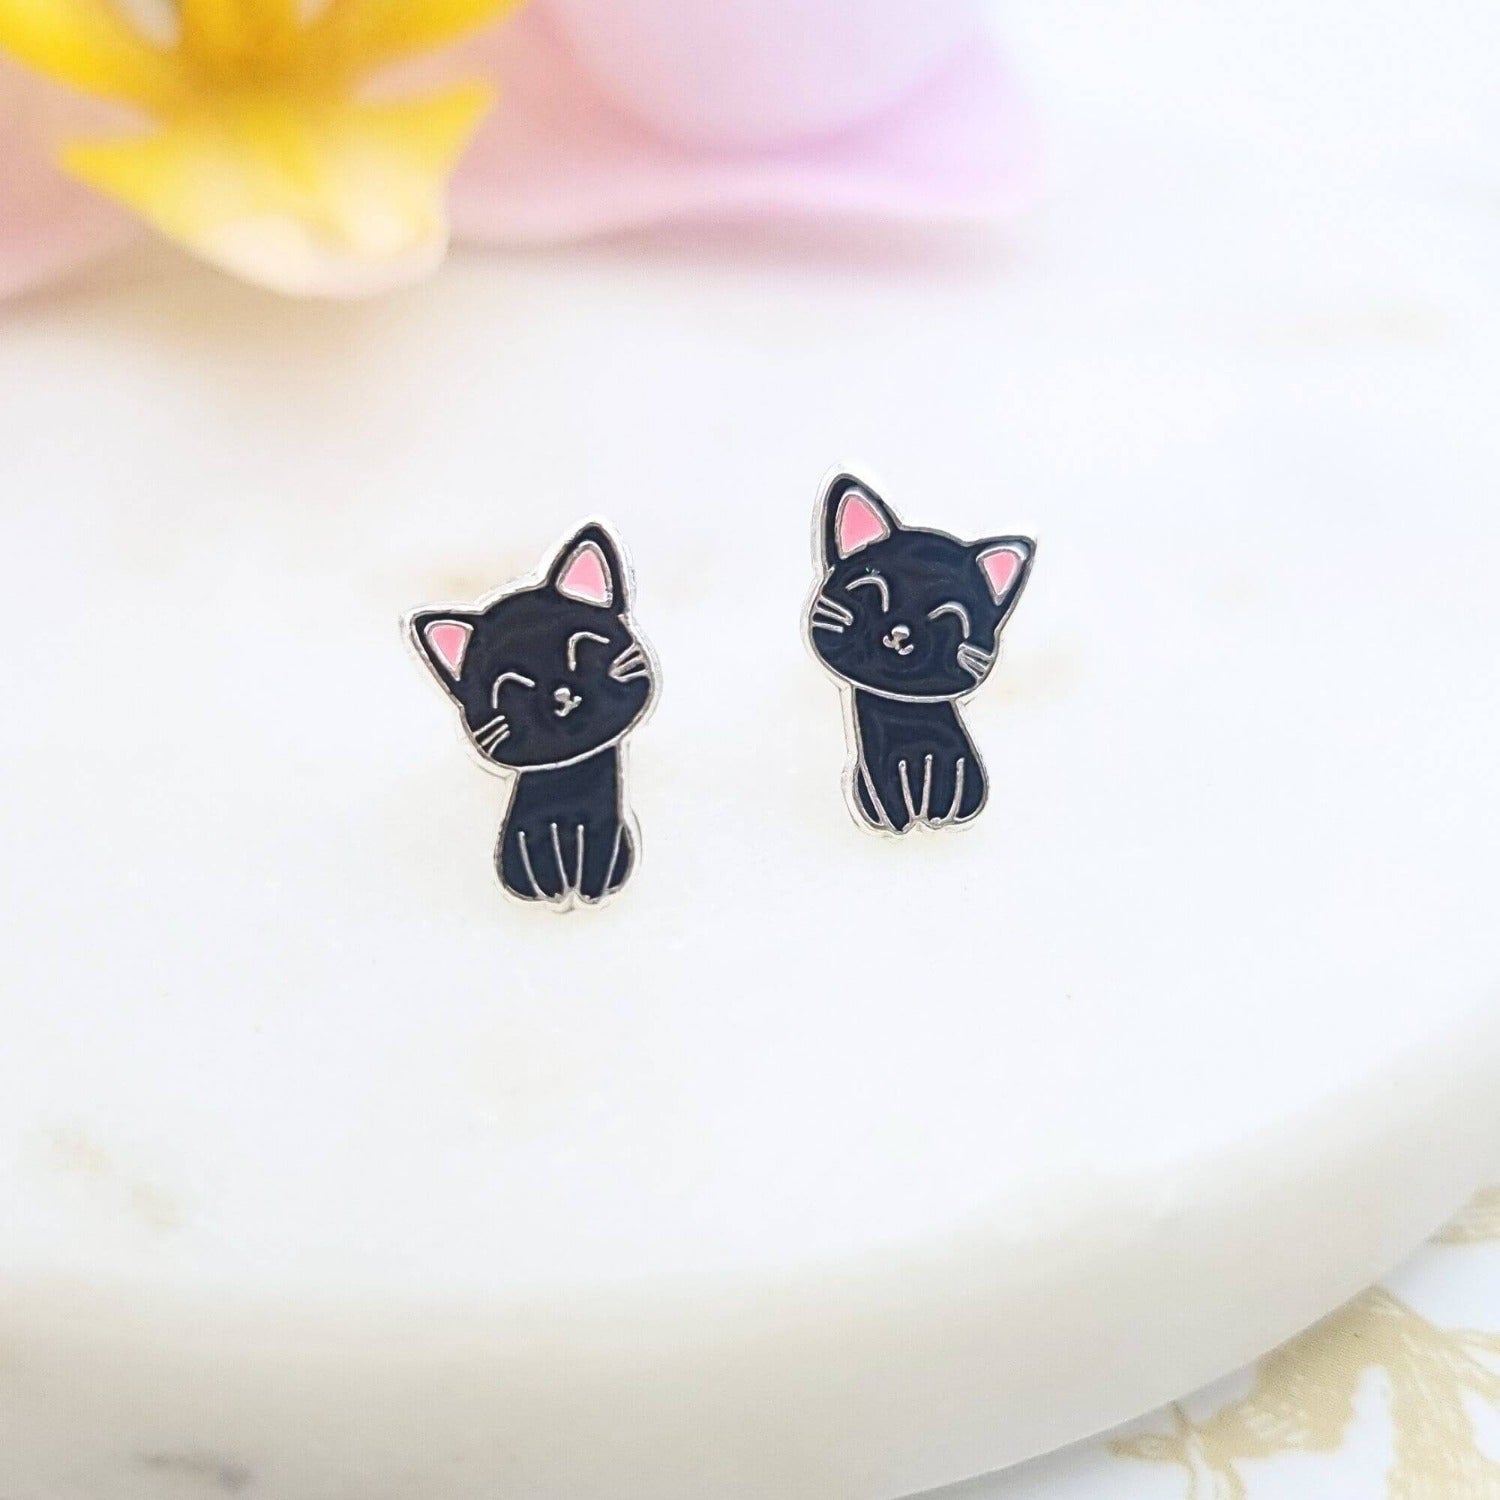 black cat stud earrings with pink ears